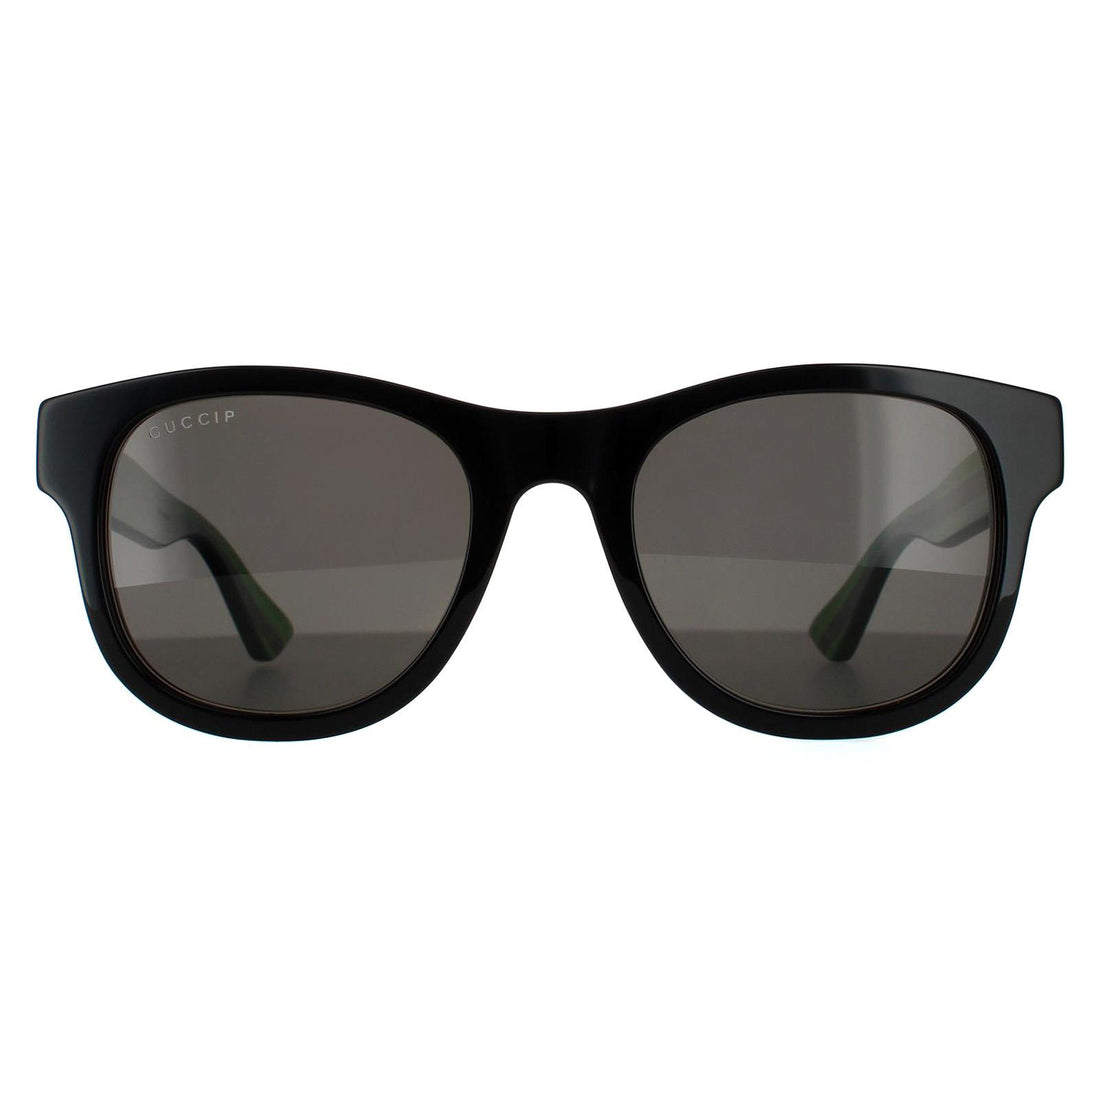 Gucci GG0003SN Sunglasses Black Green Grey / Grey